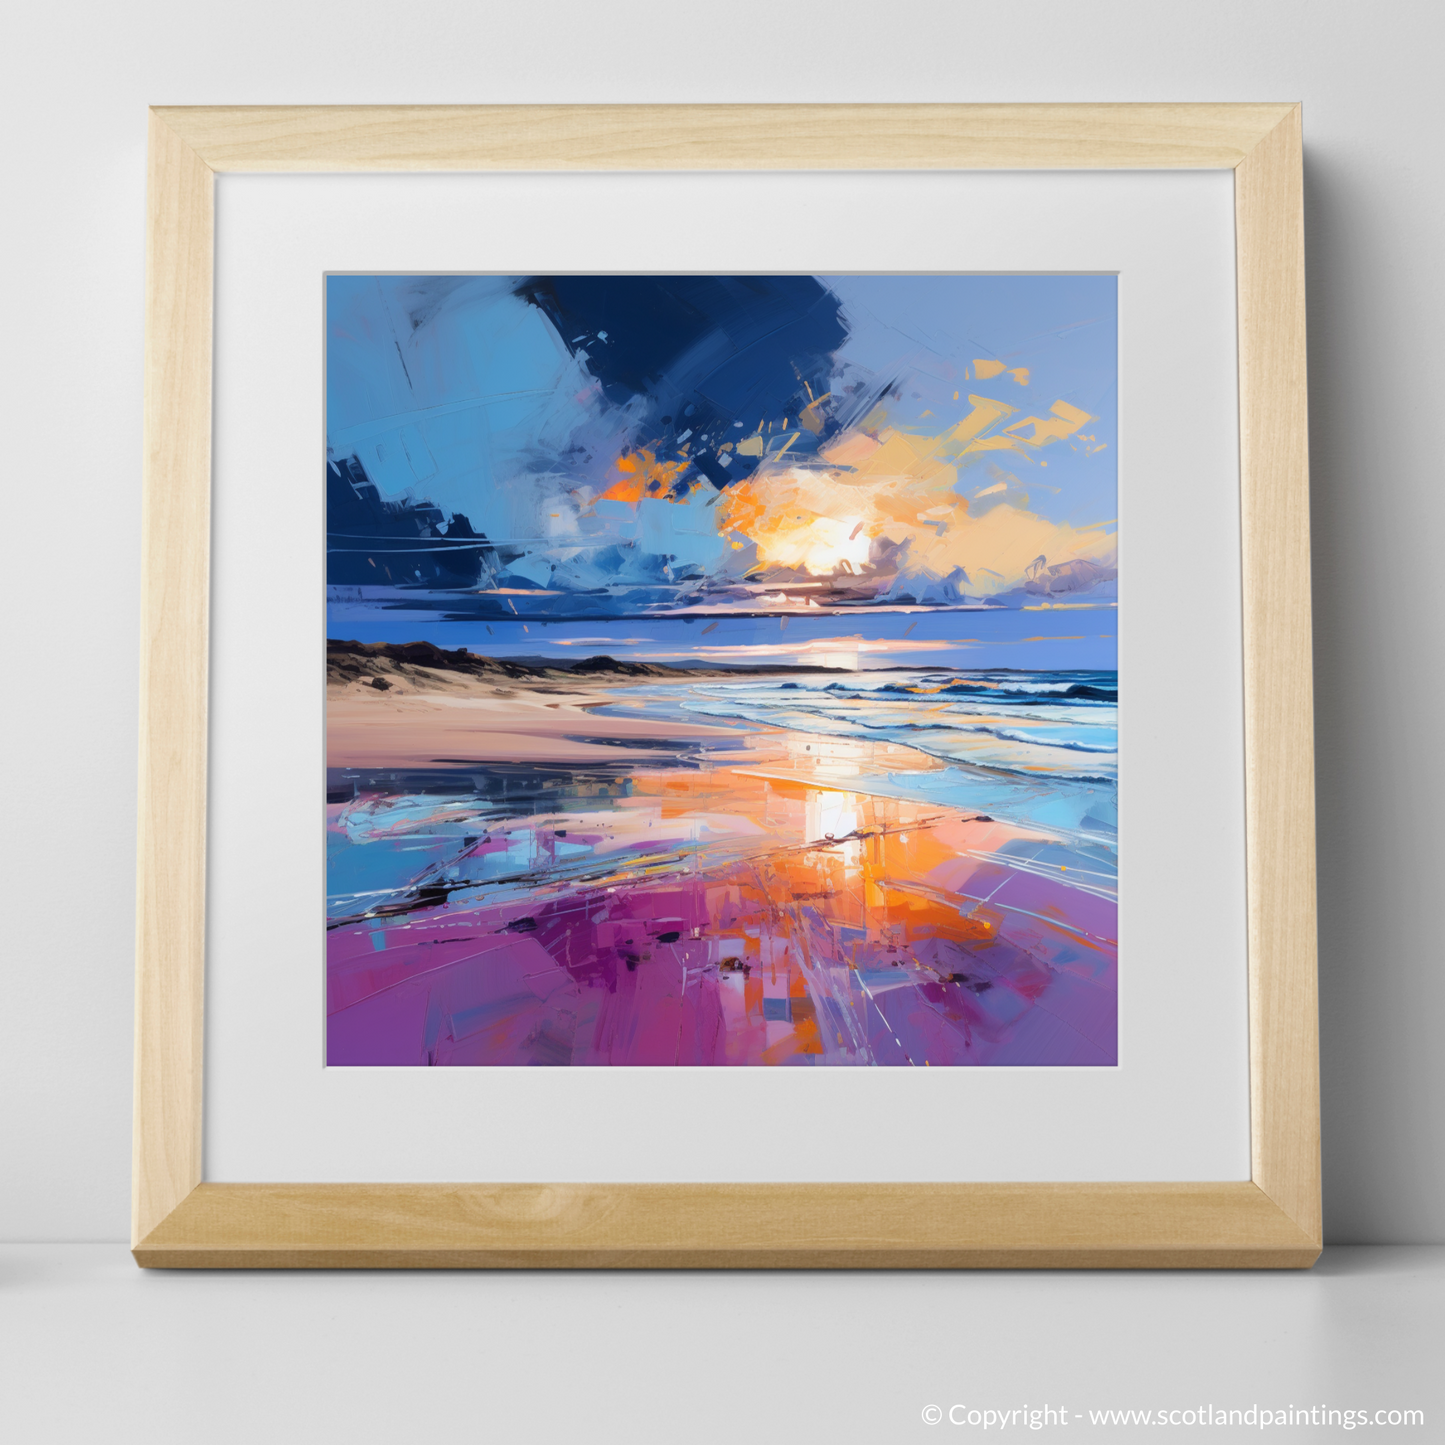 Art Print of Balmedie Beach at dusk with a natural frame